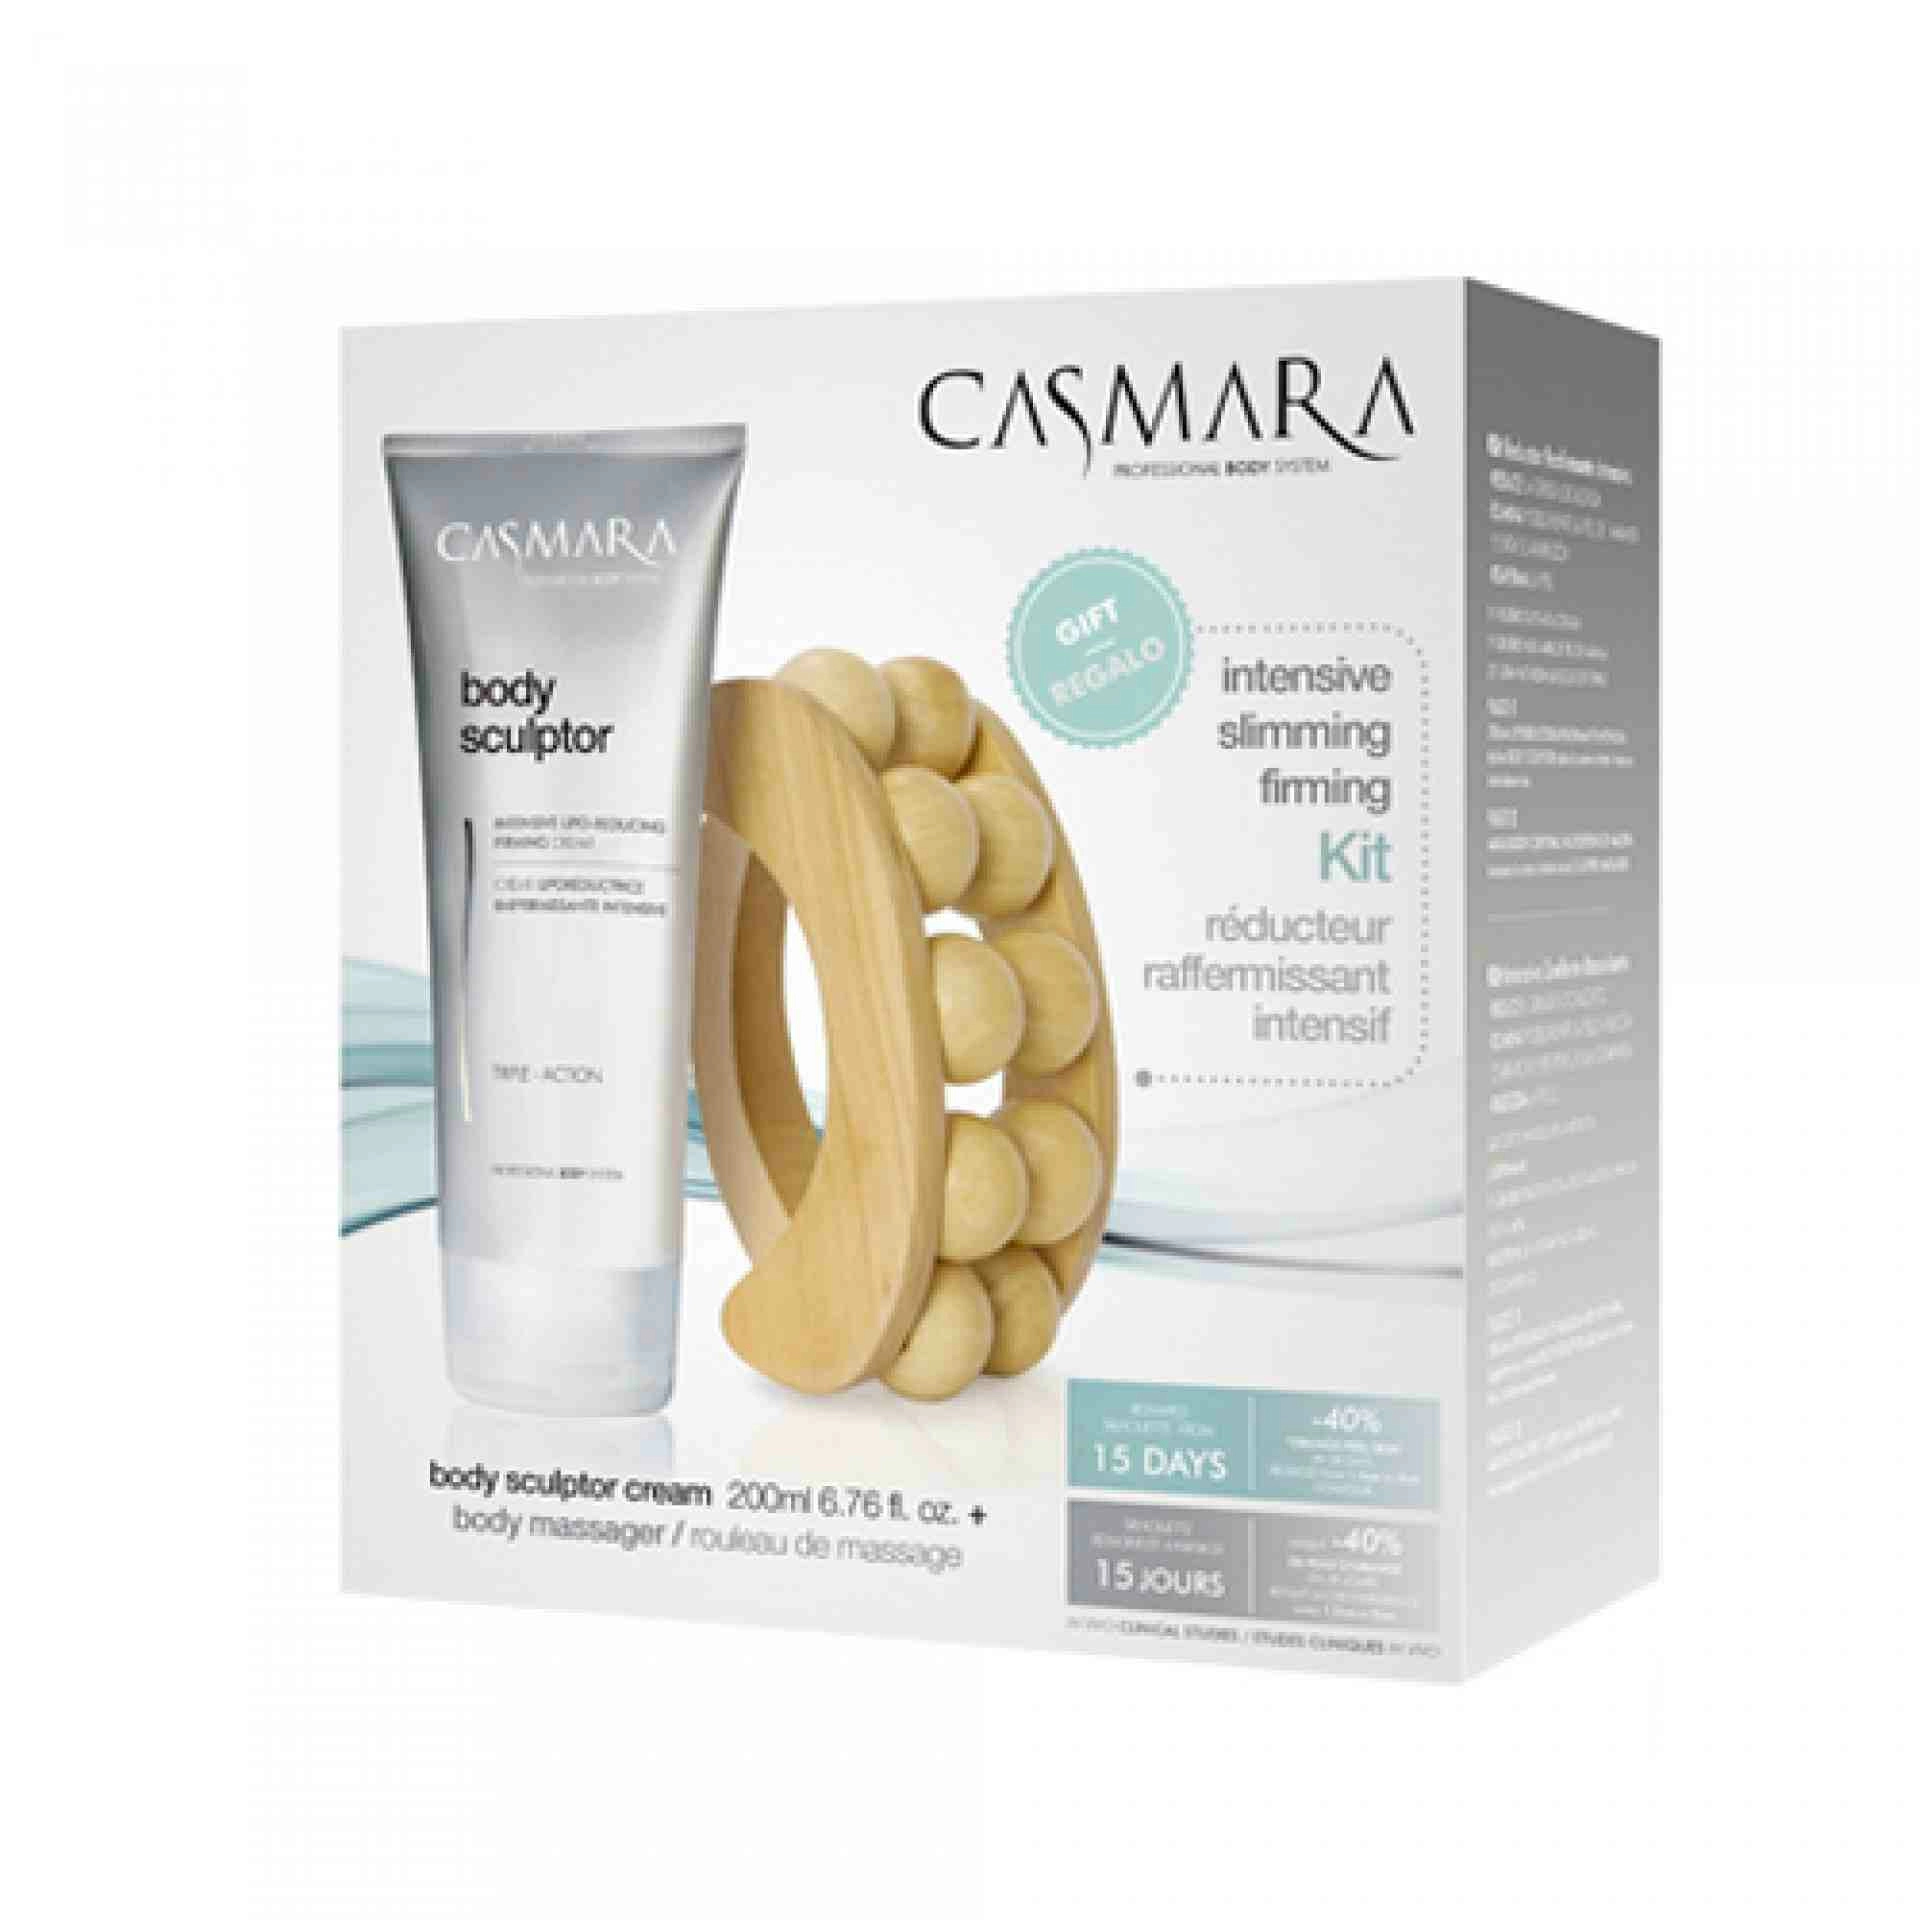 Intensive Slimming Firming | Reductor reafirmante Intensivo Kit - Casmara ®